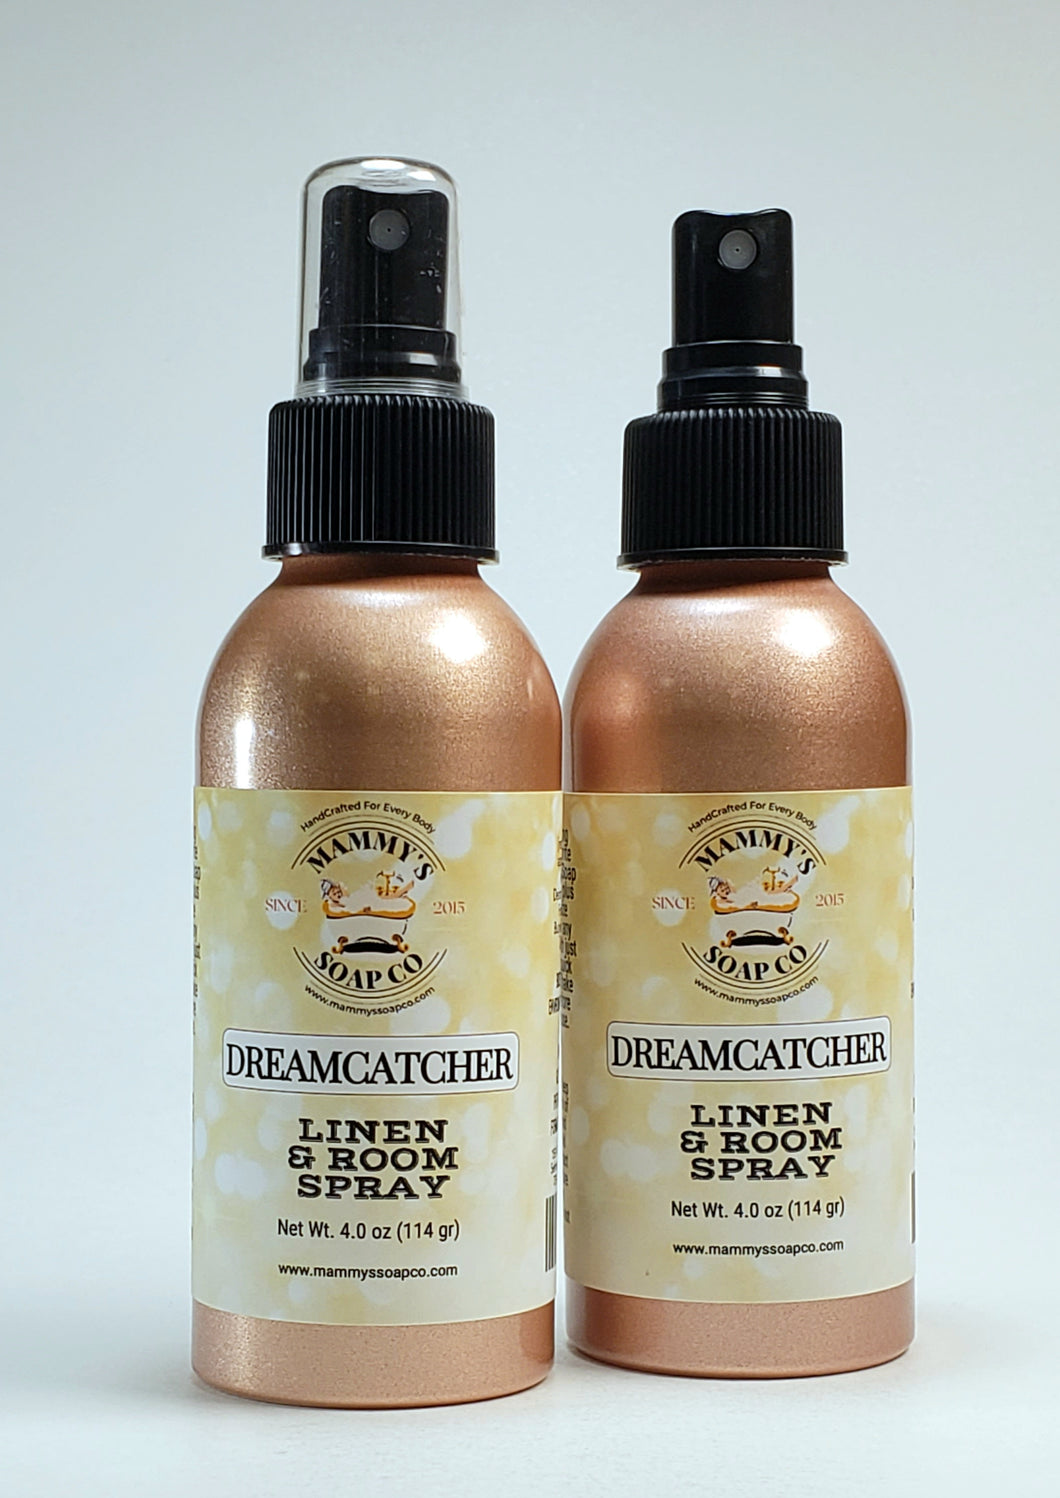 Dreamcatcher Linen & Room Spray